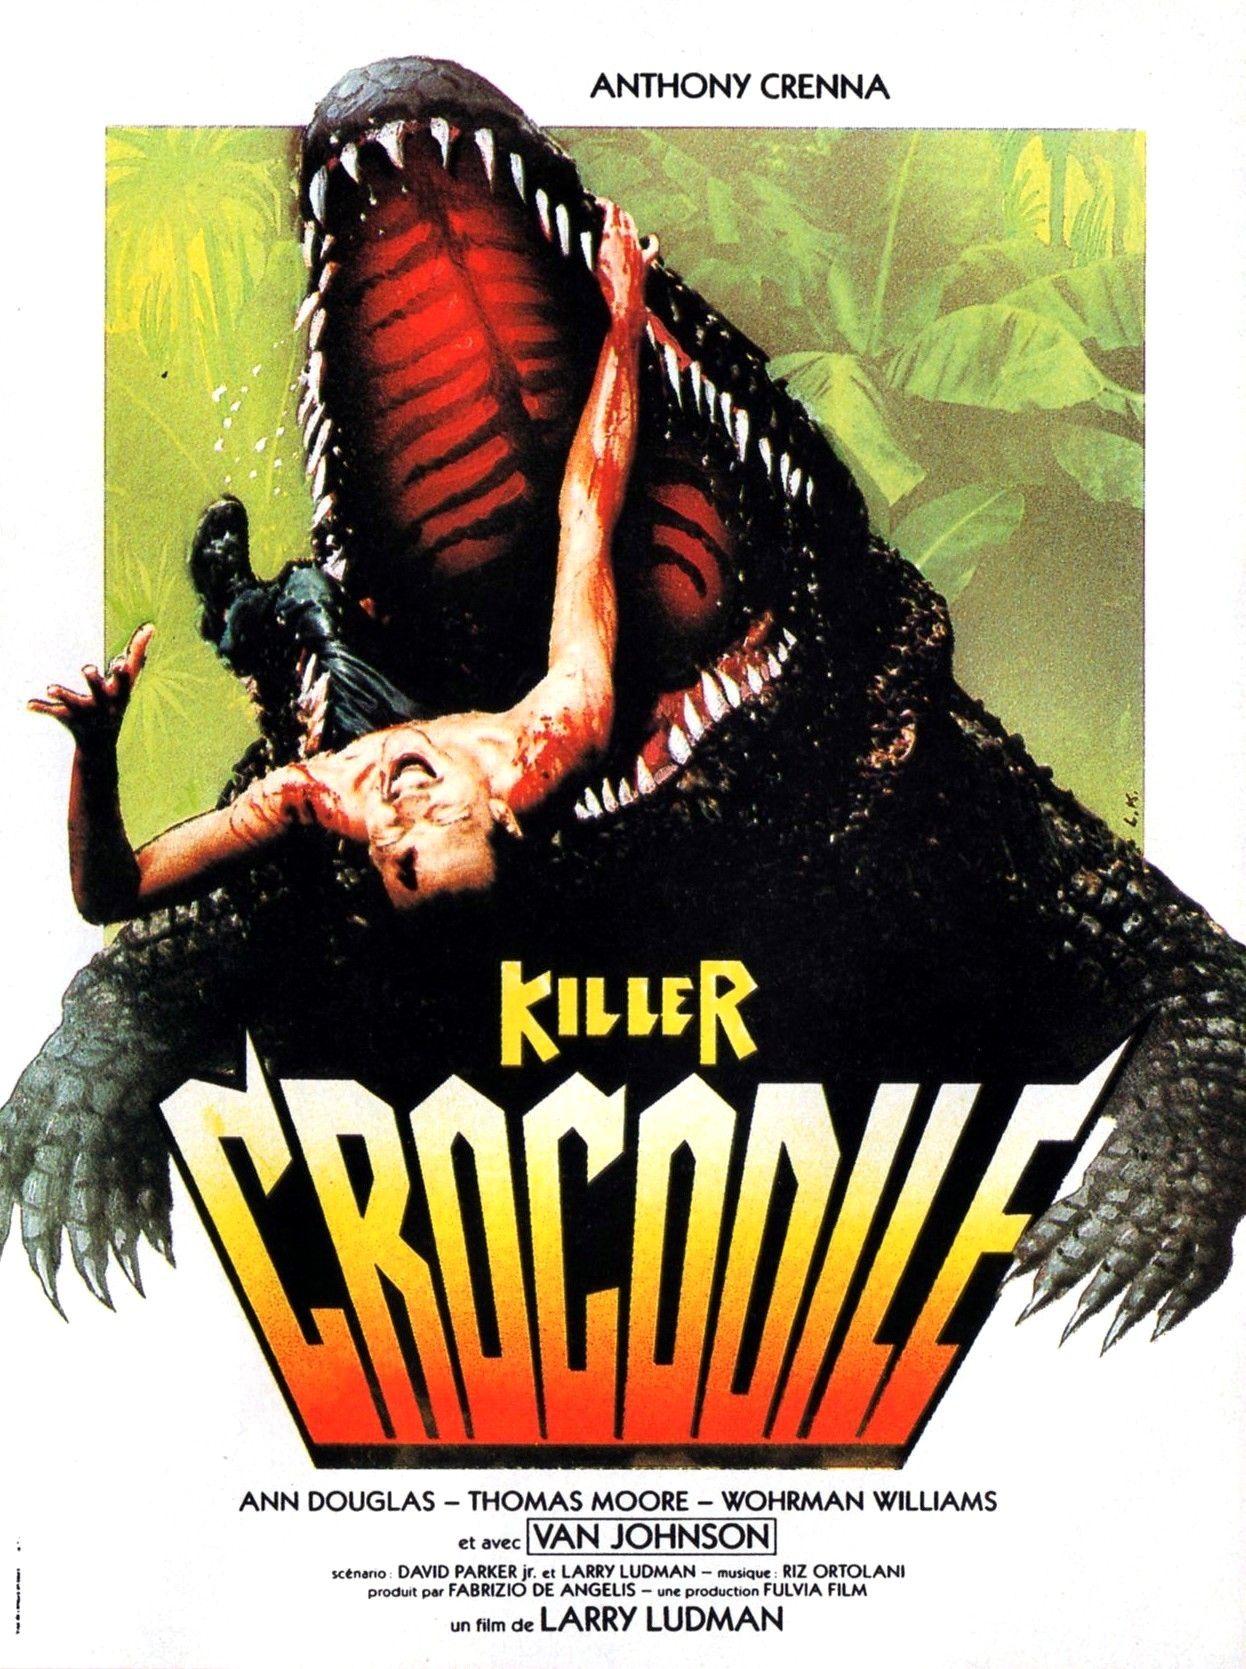 Killer Croc Logo - Killer Crocodile (1989)